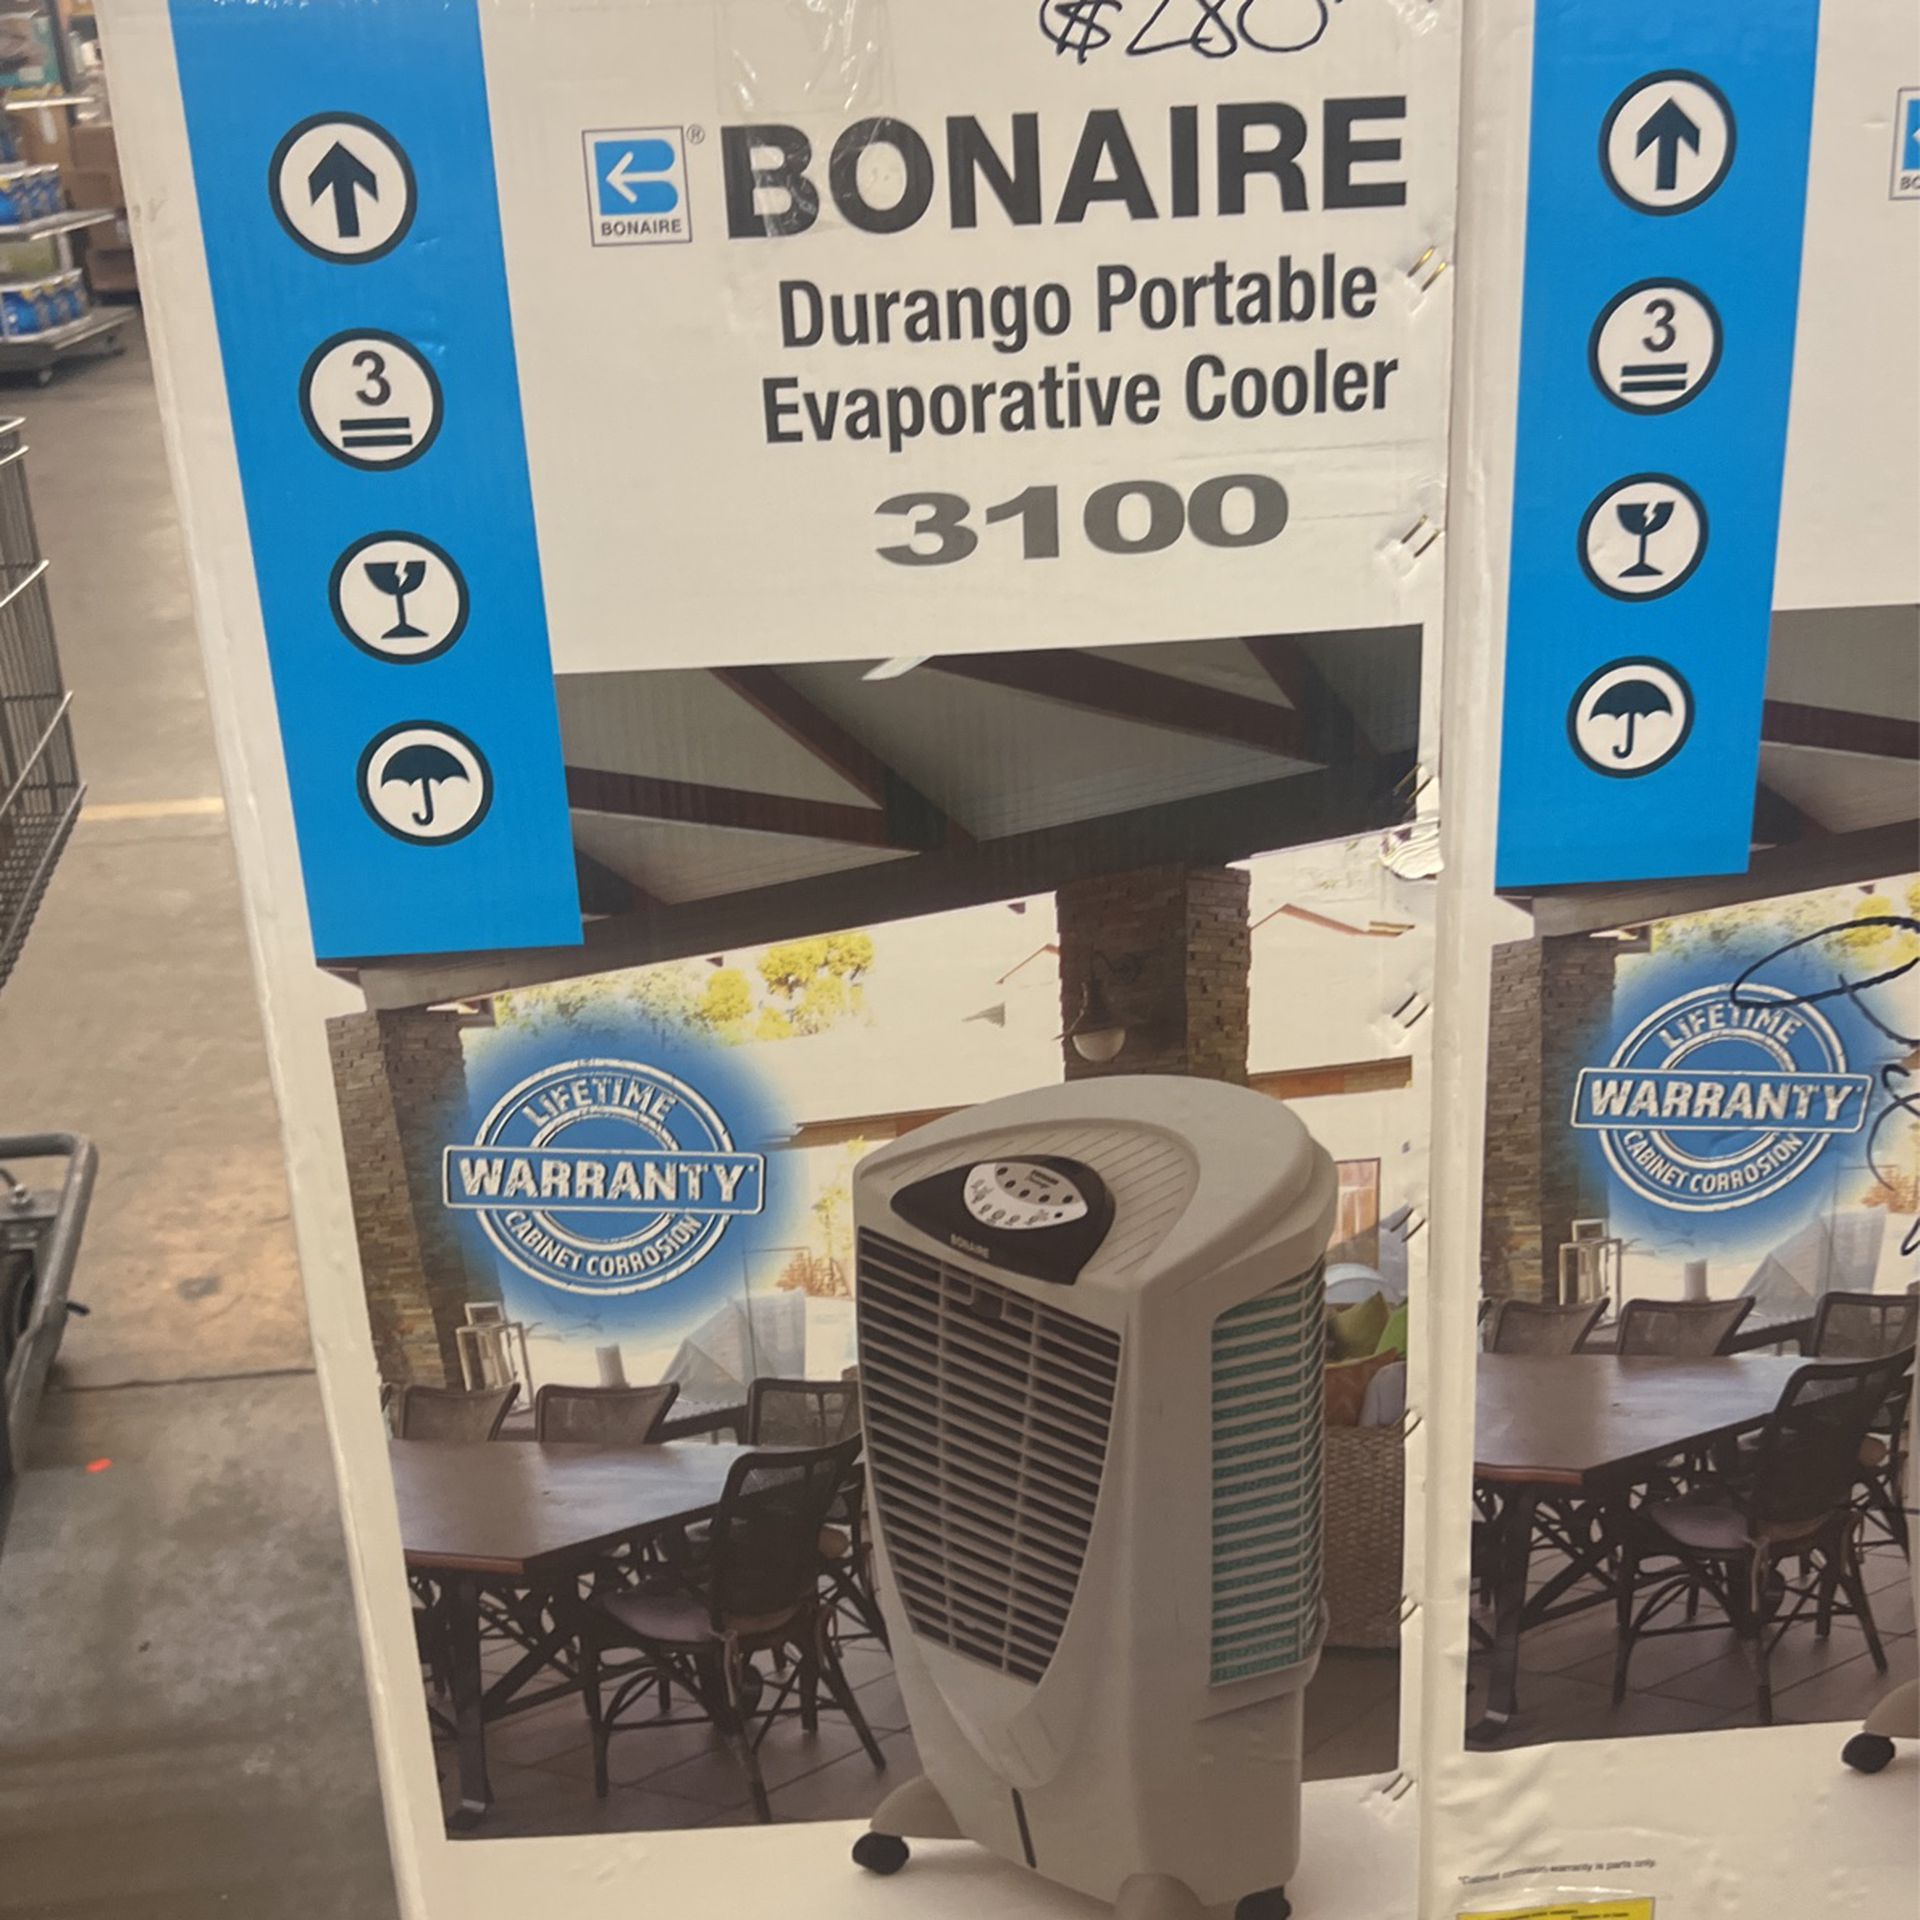 BONAIRE Durango Portable Evaporative Cooler 3100